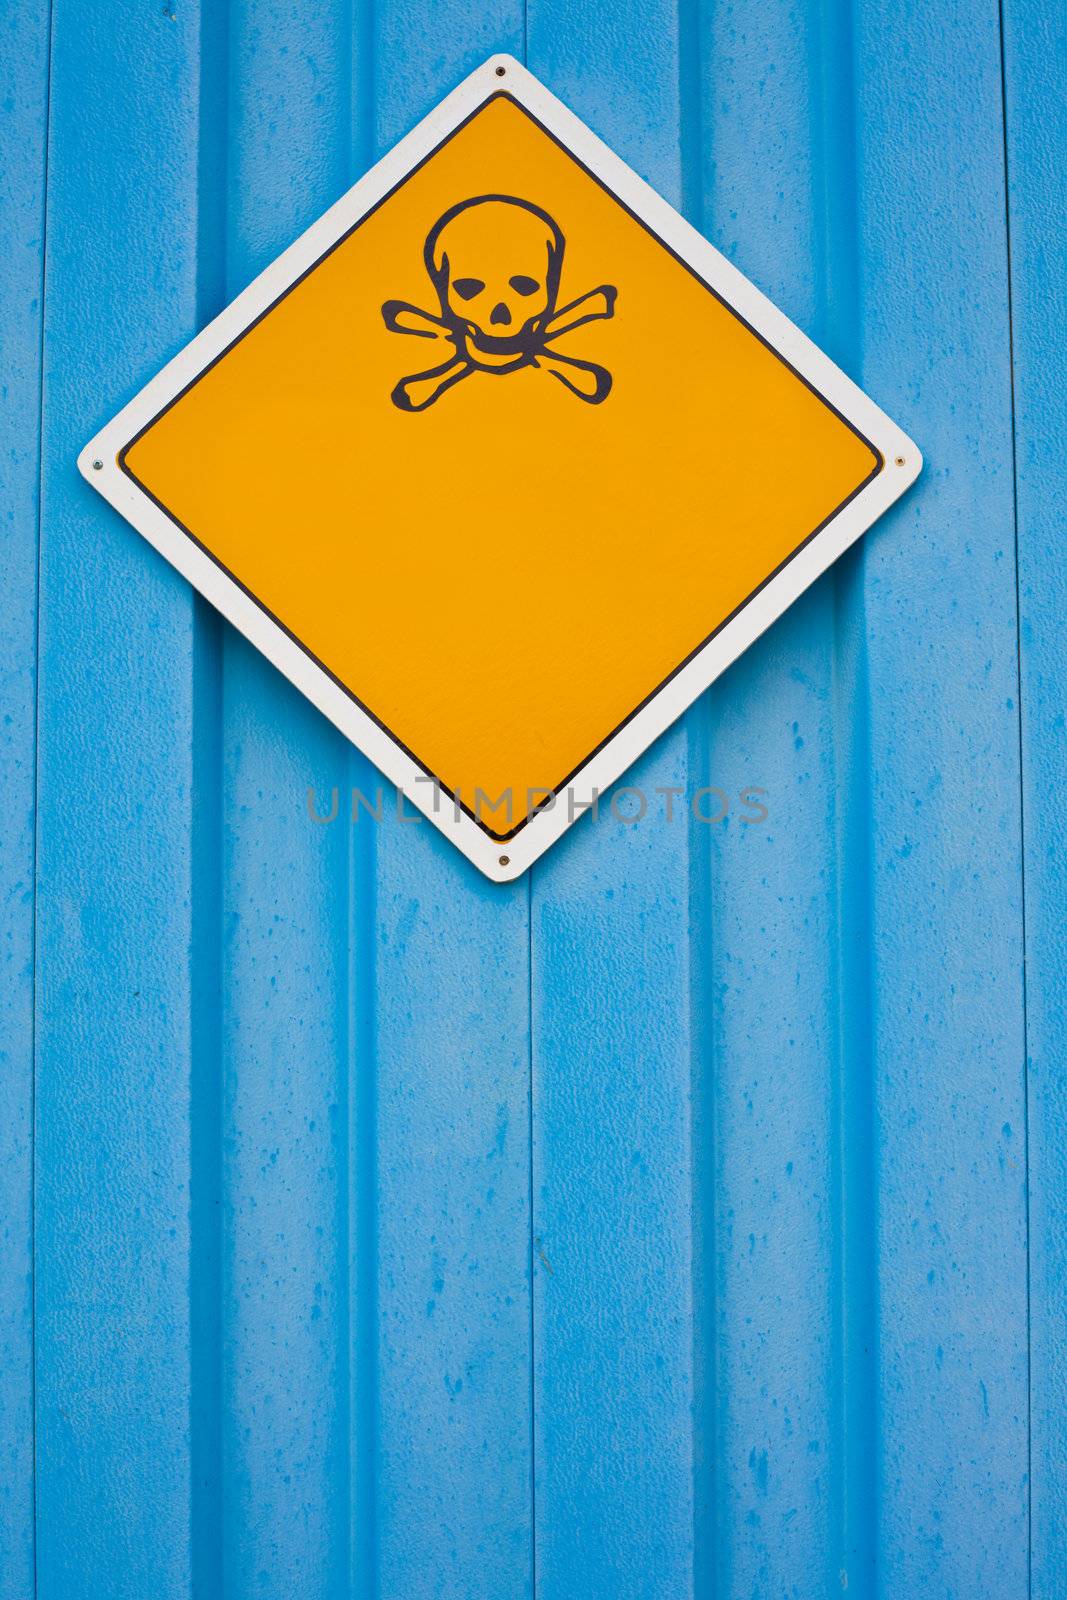 Skull and crossbones warning sign by PiLens